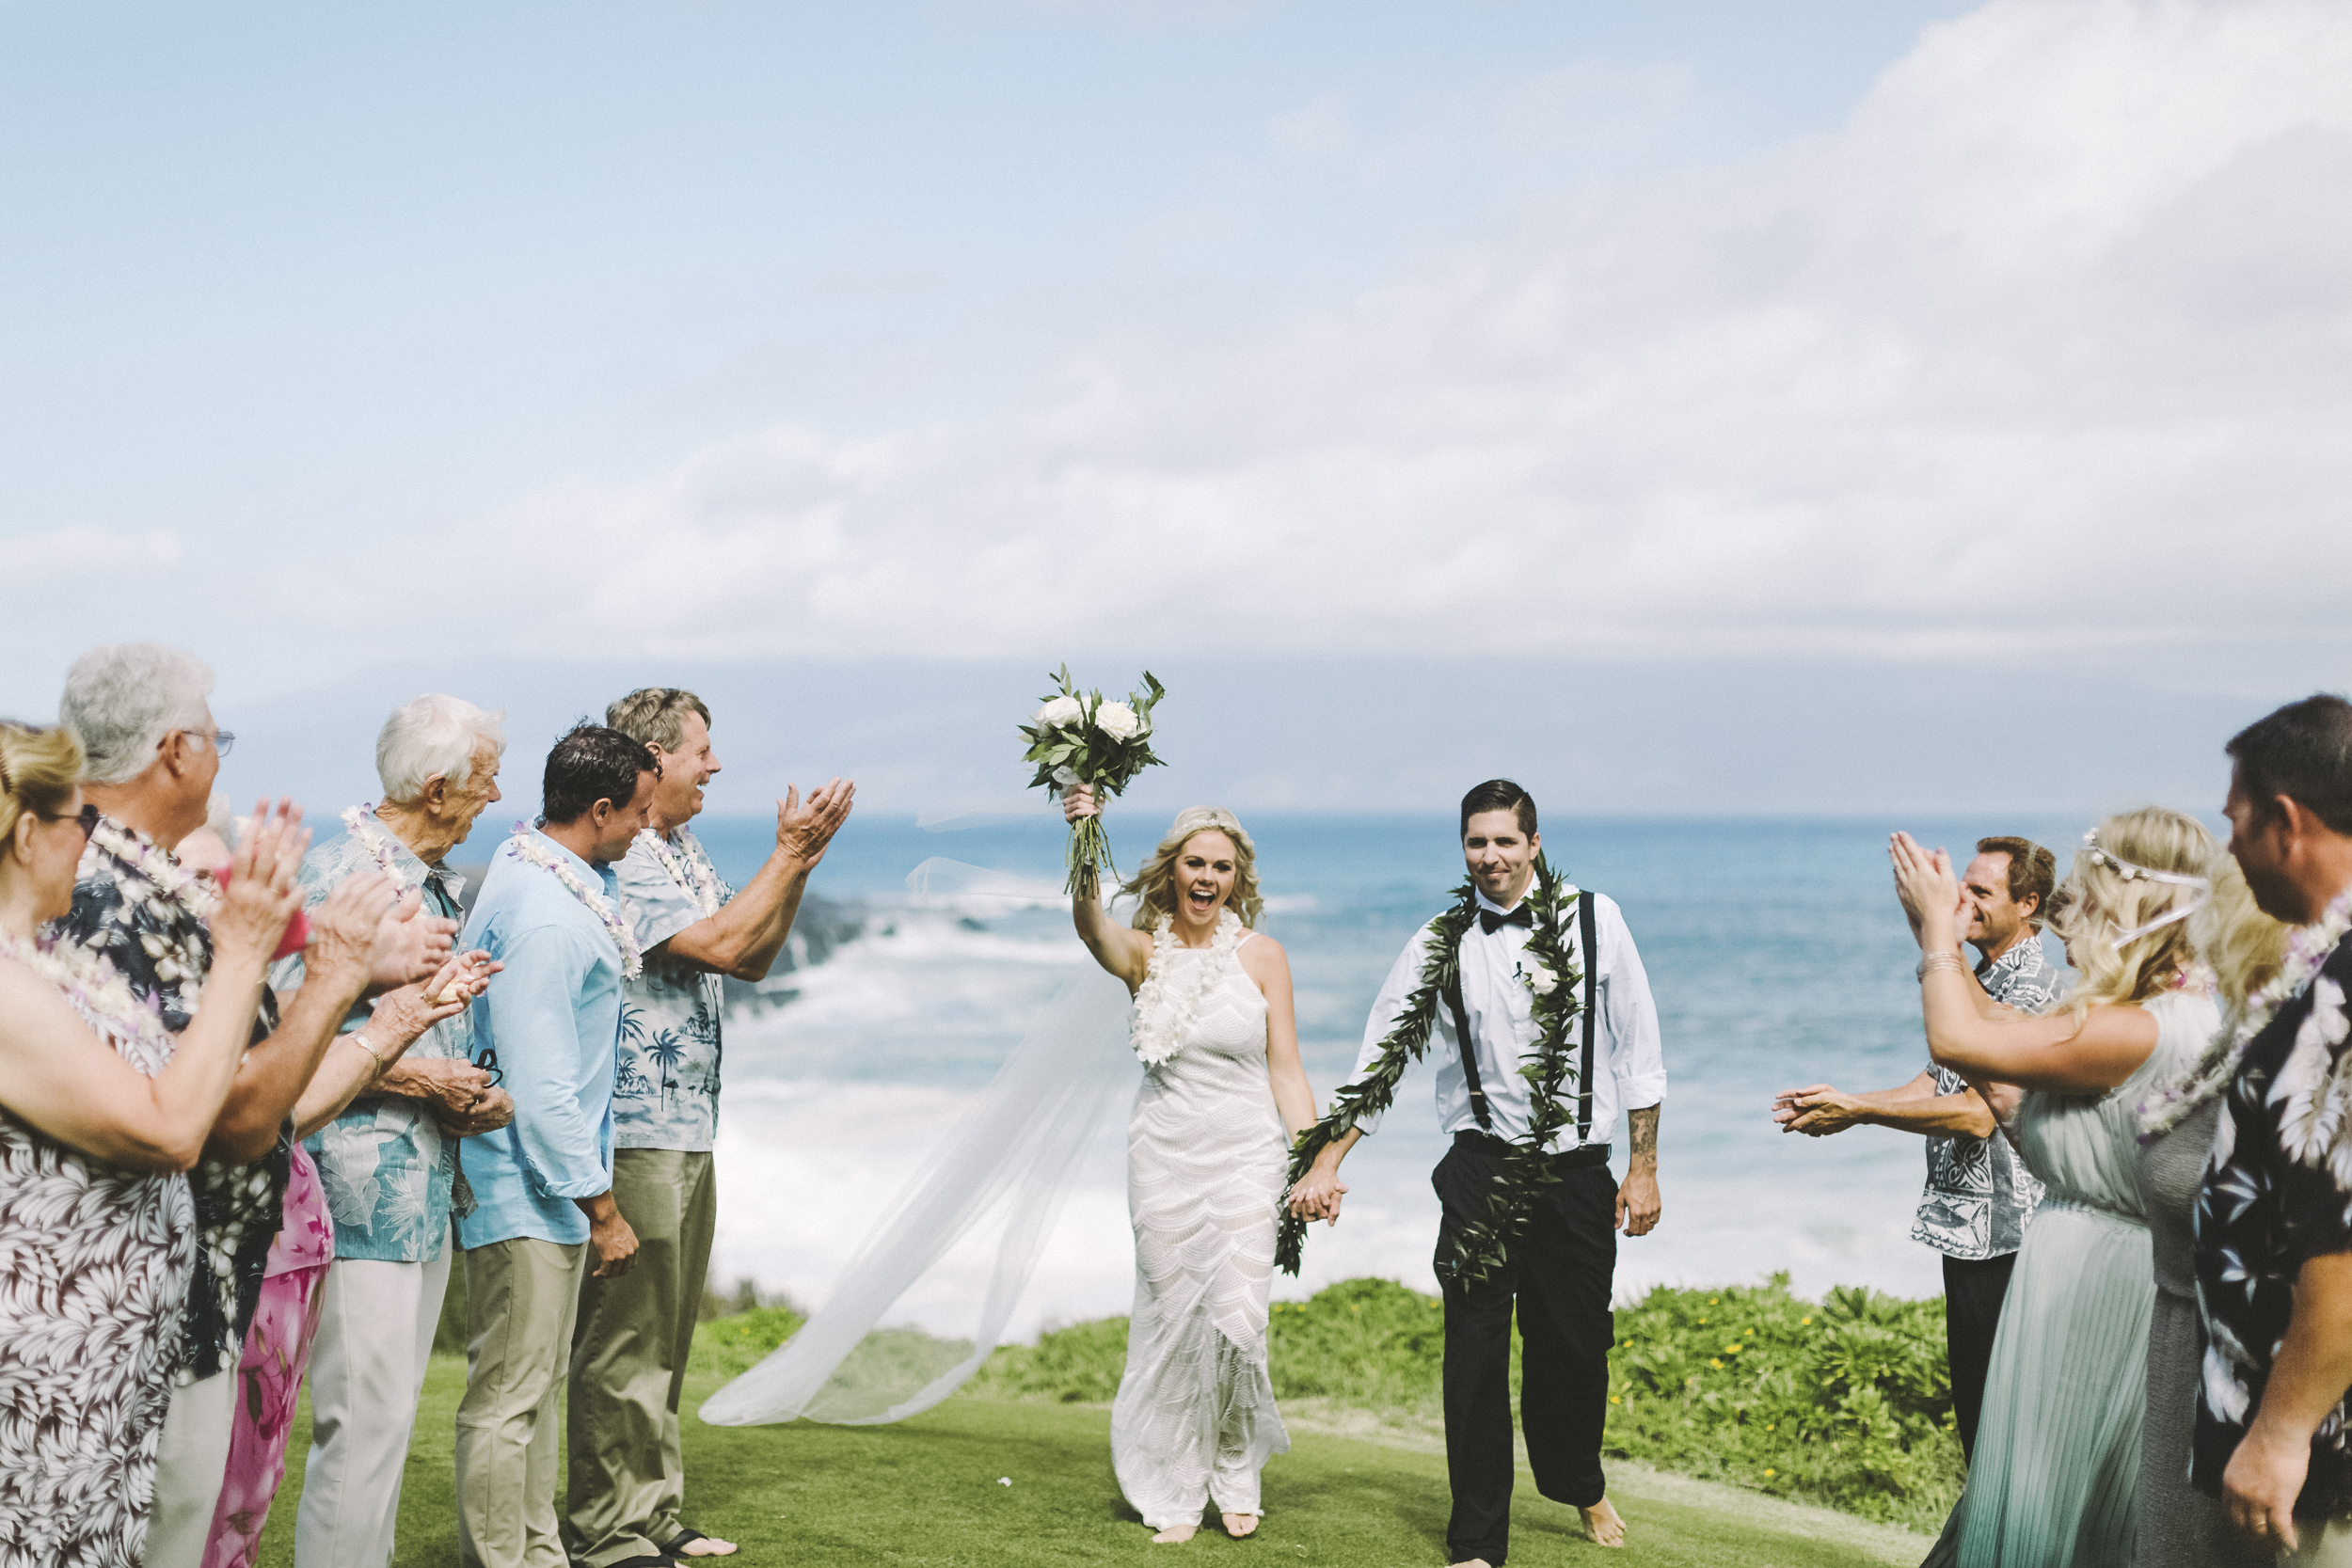 angie-diaz-photography-hawaii-wedding-22.jpg